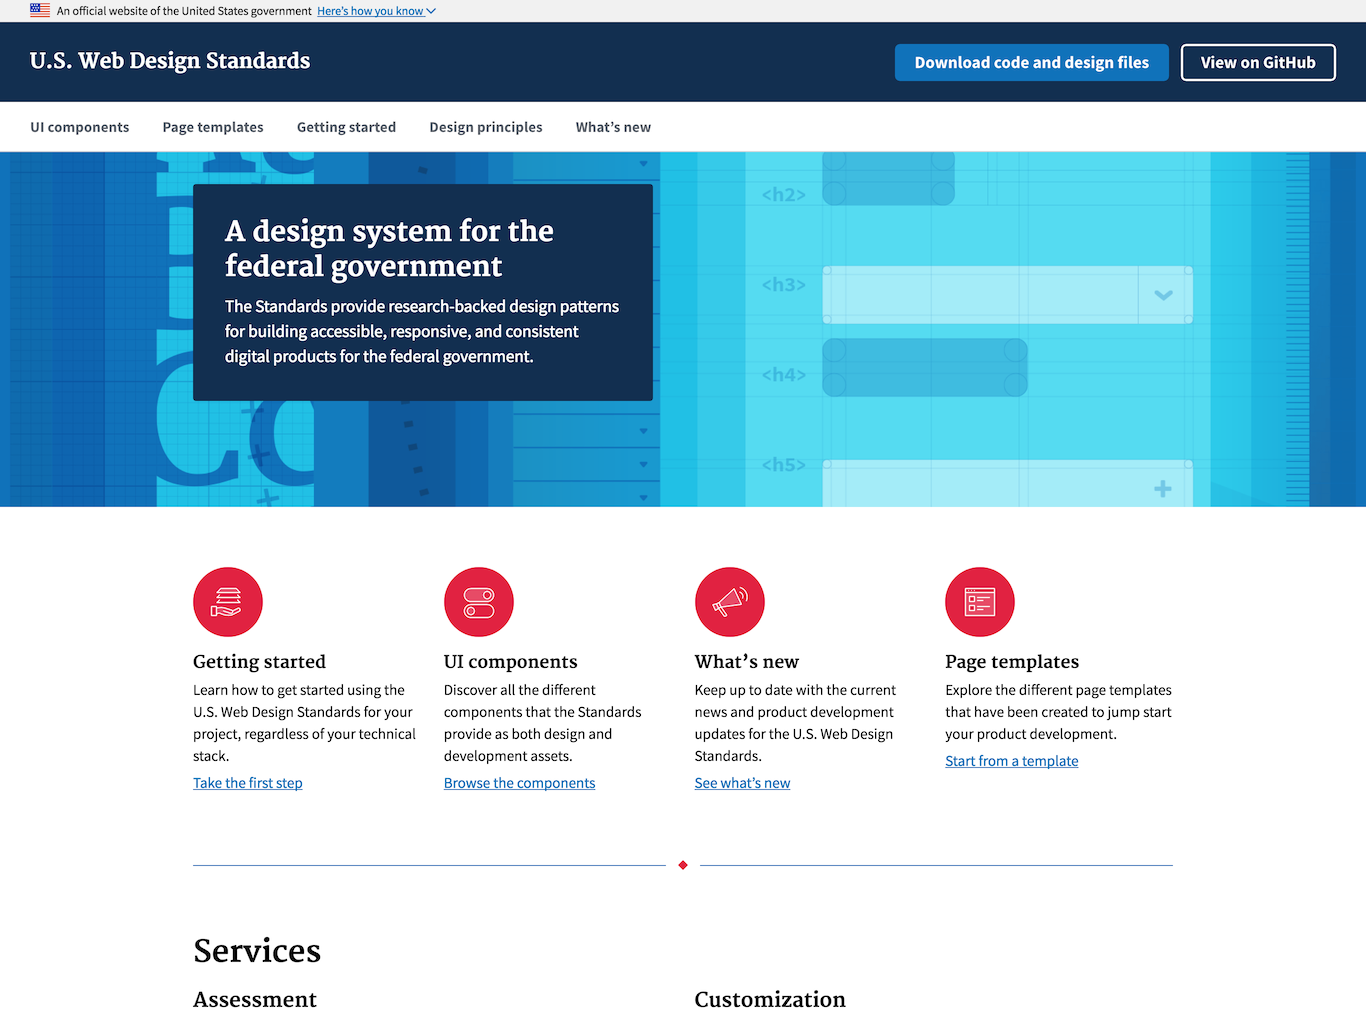 The homepage for standards.usa.gov